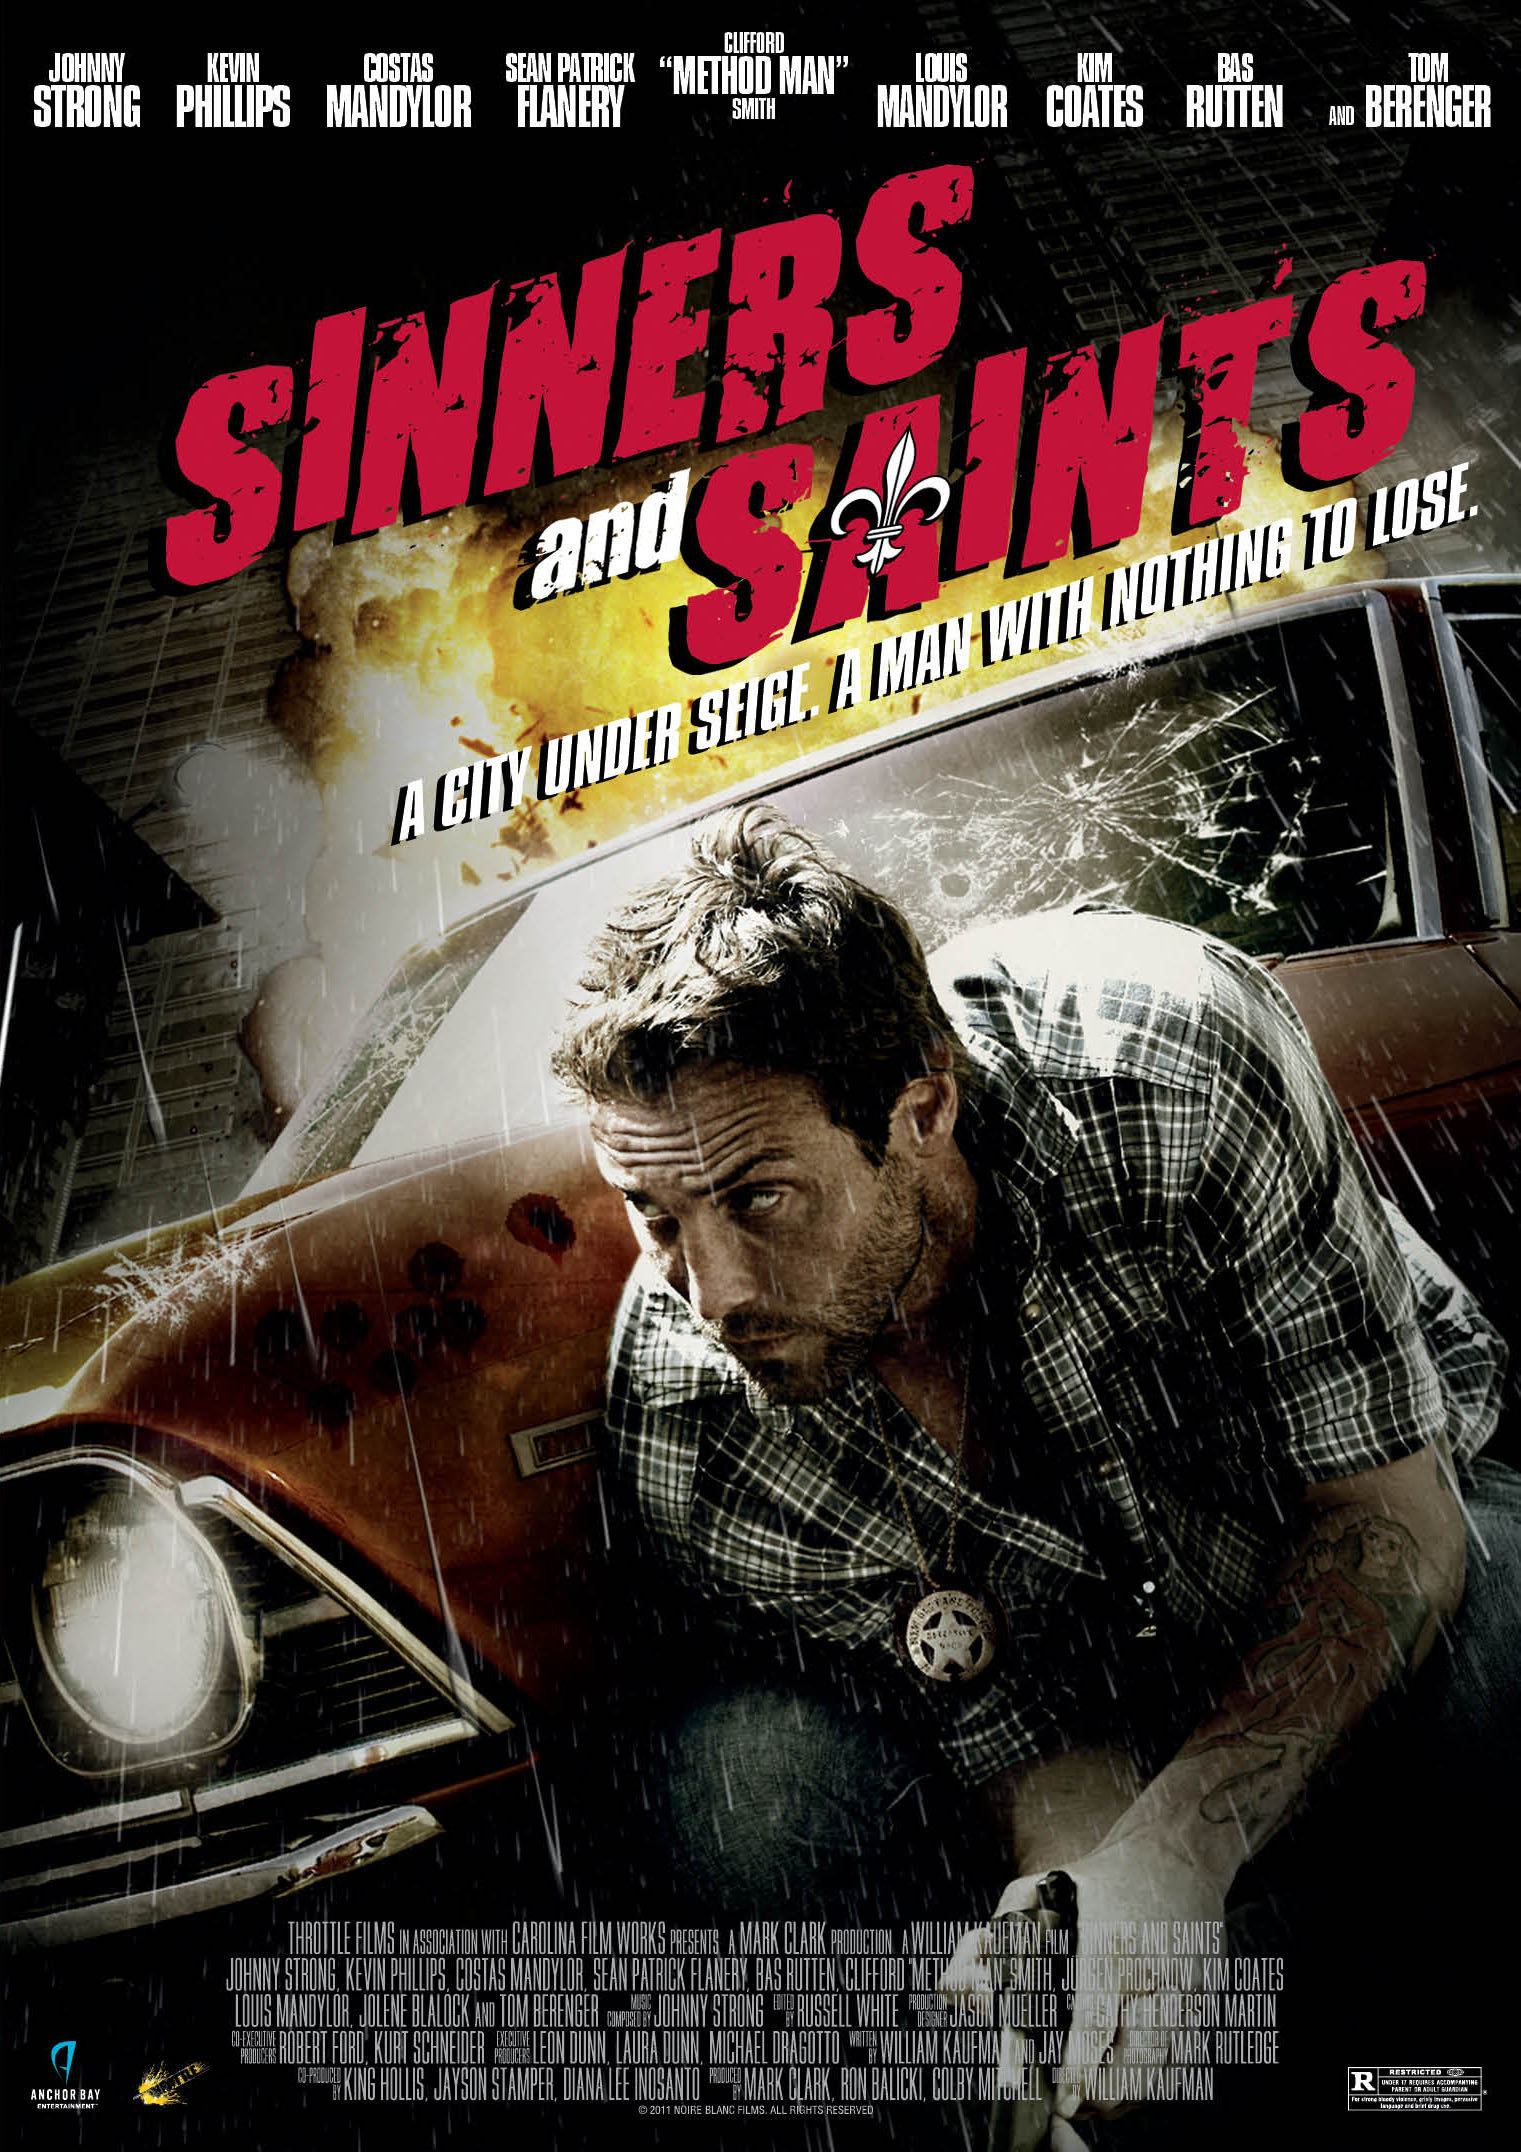 Nonton film Sinners and Saints layarkaca21 indoxx1 ganool online streaming terbaru